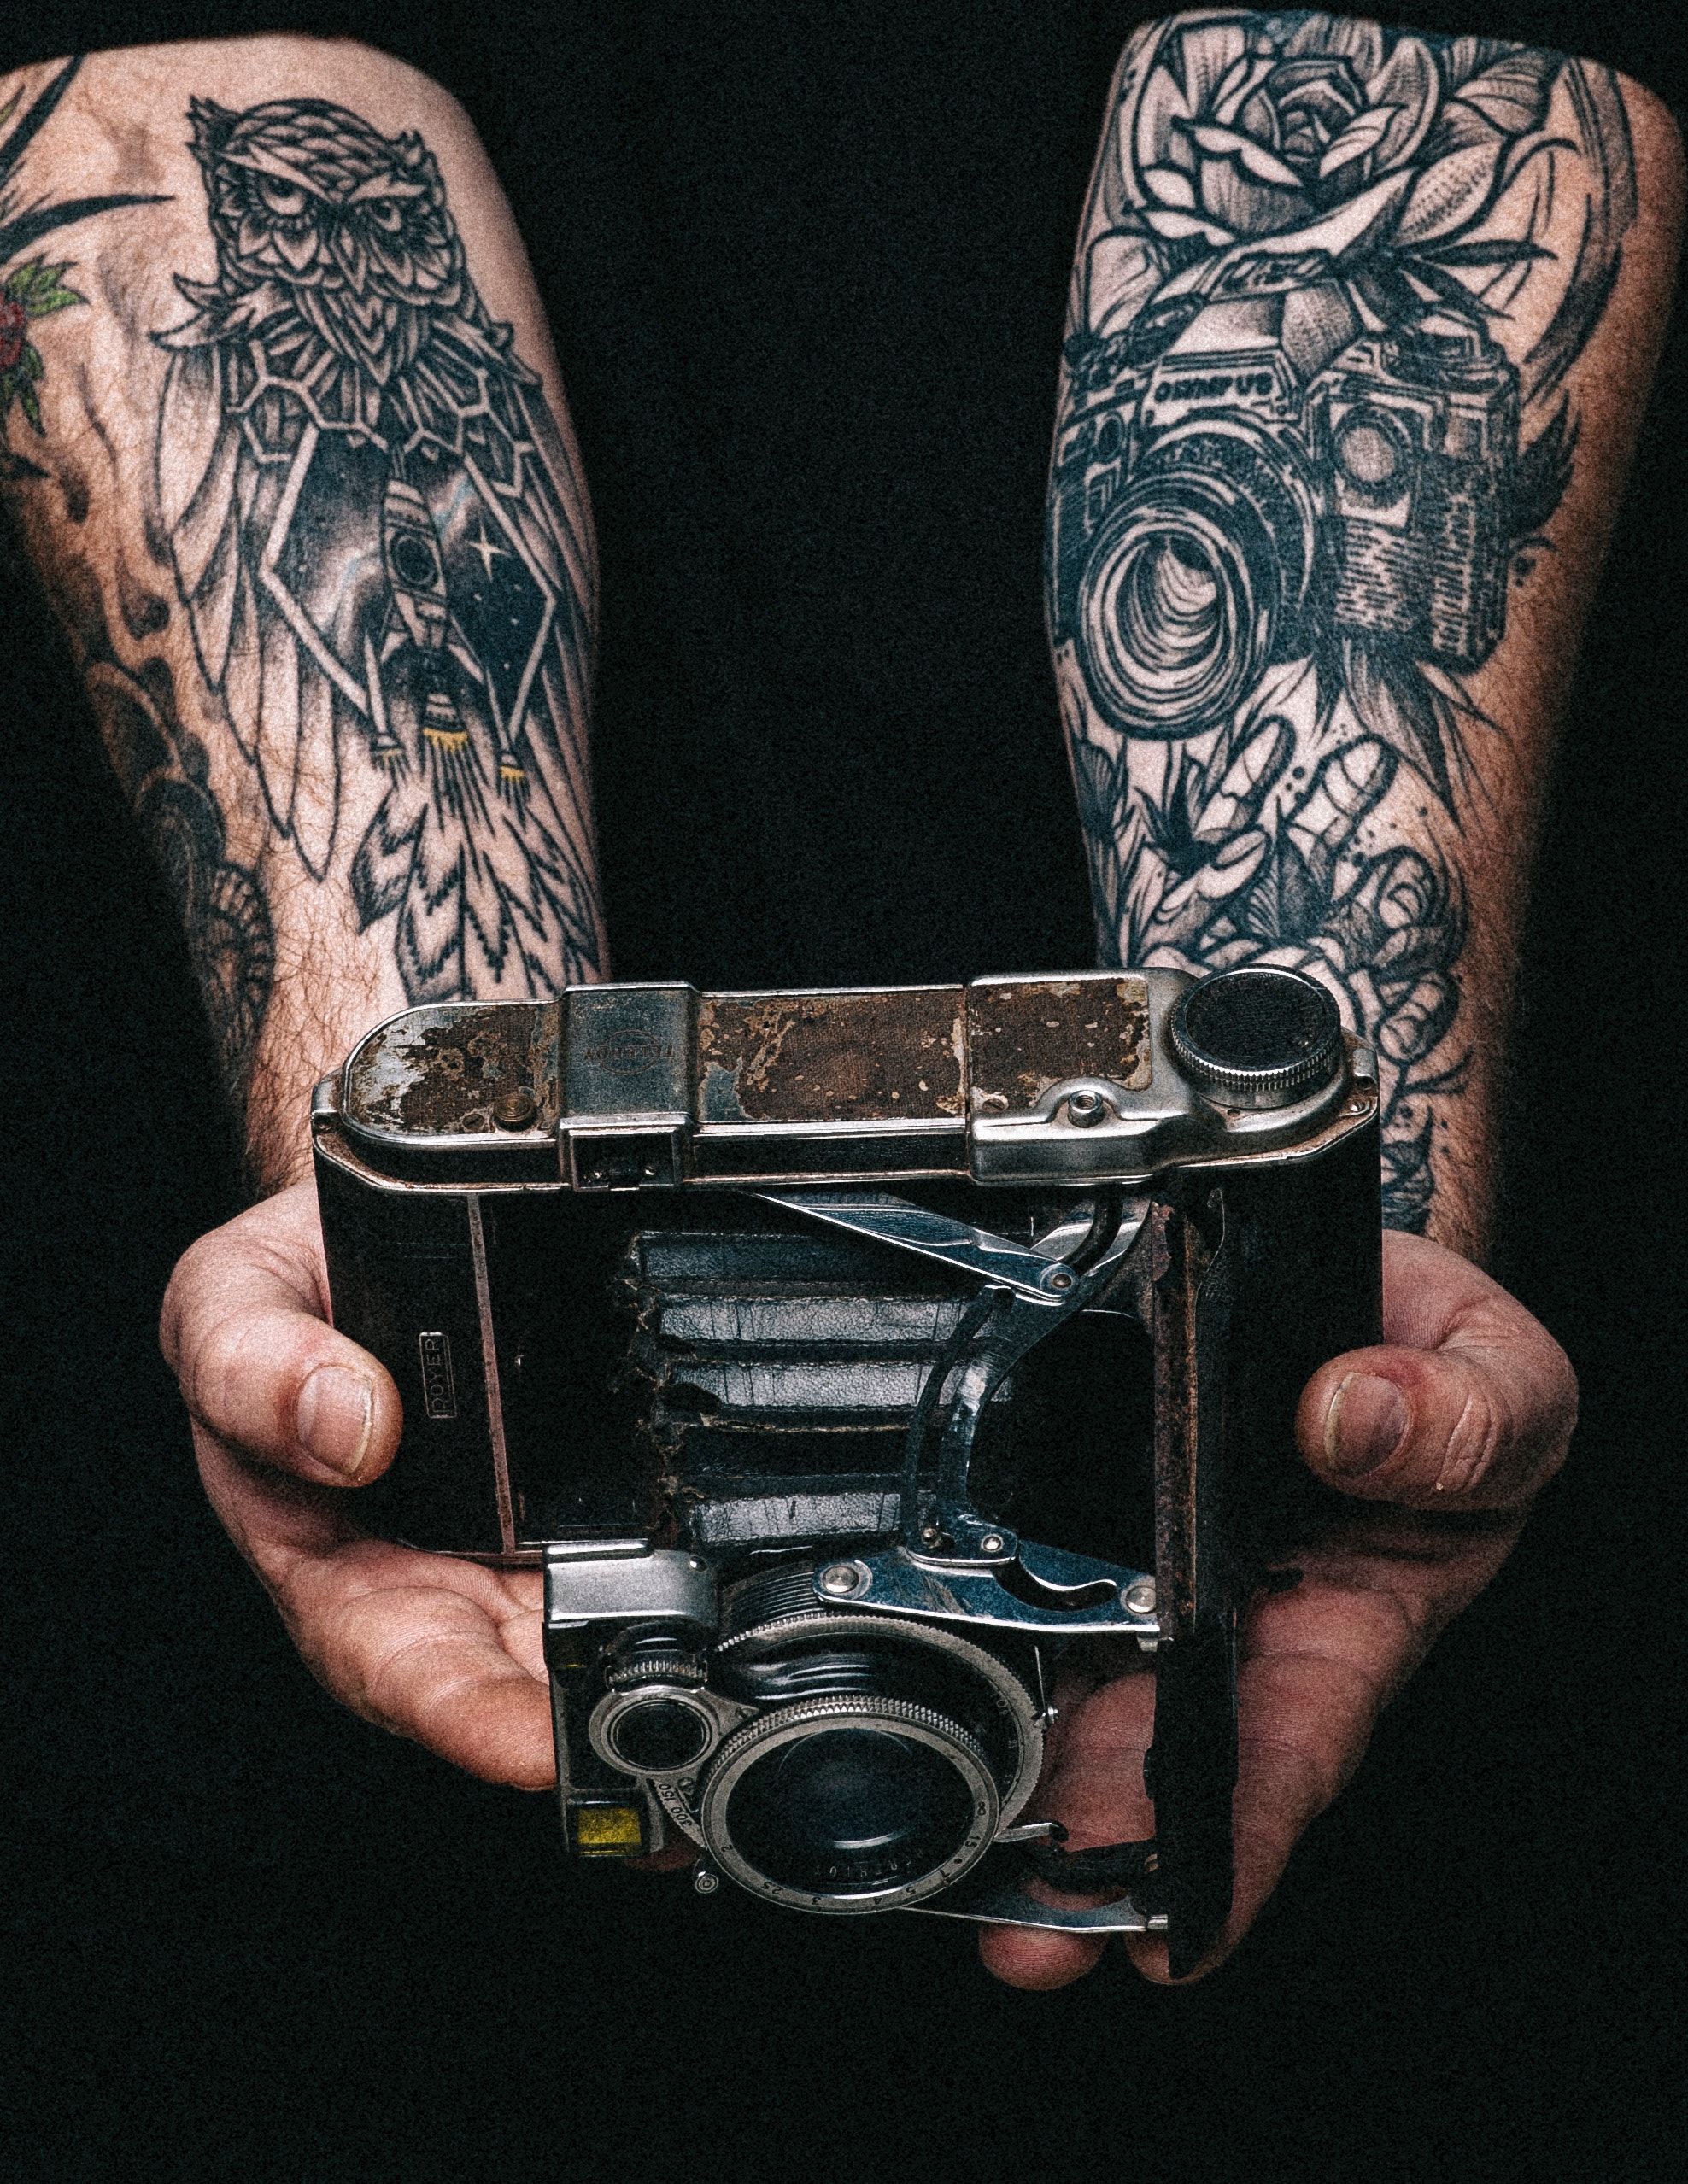 Tattoos: the new symbols of self-identity | by Kuheli Biswas | Medium